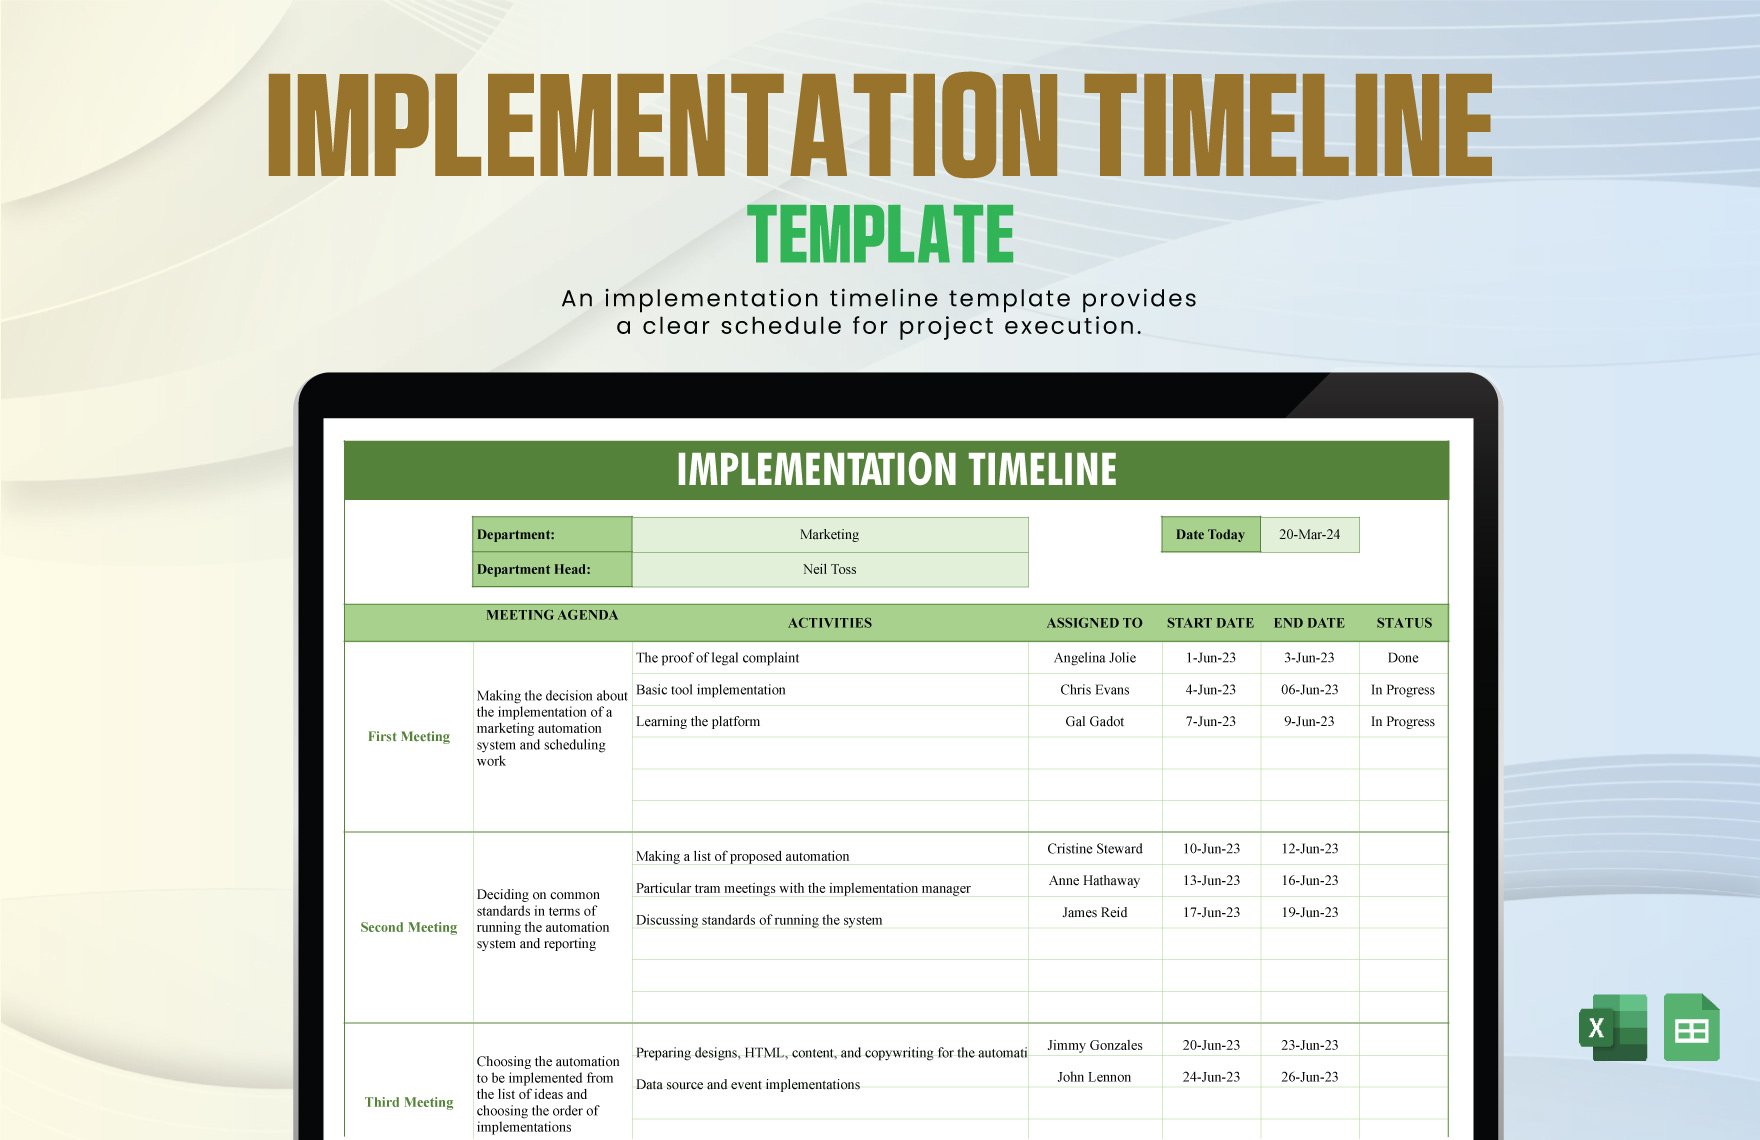 Implementation Timeline Template in Excel, Google Sheets